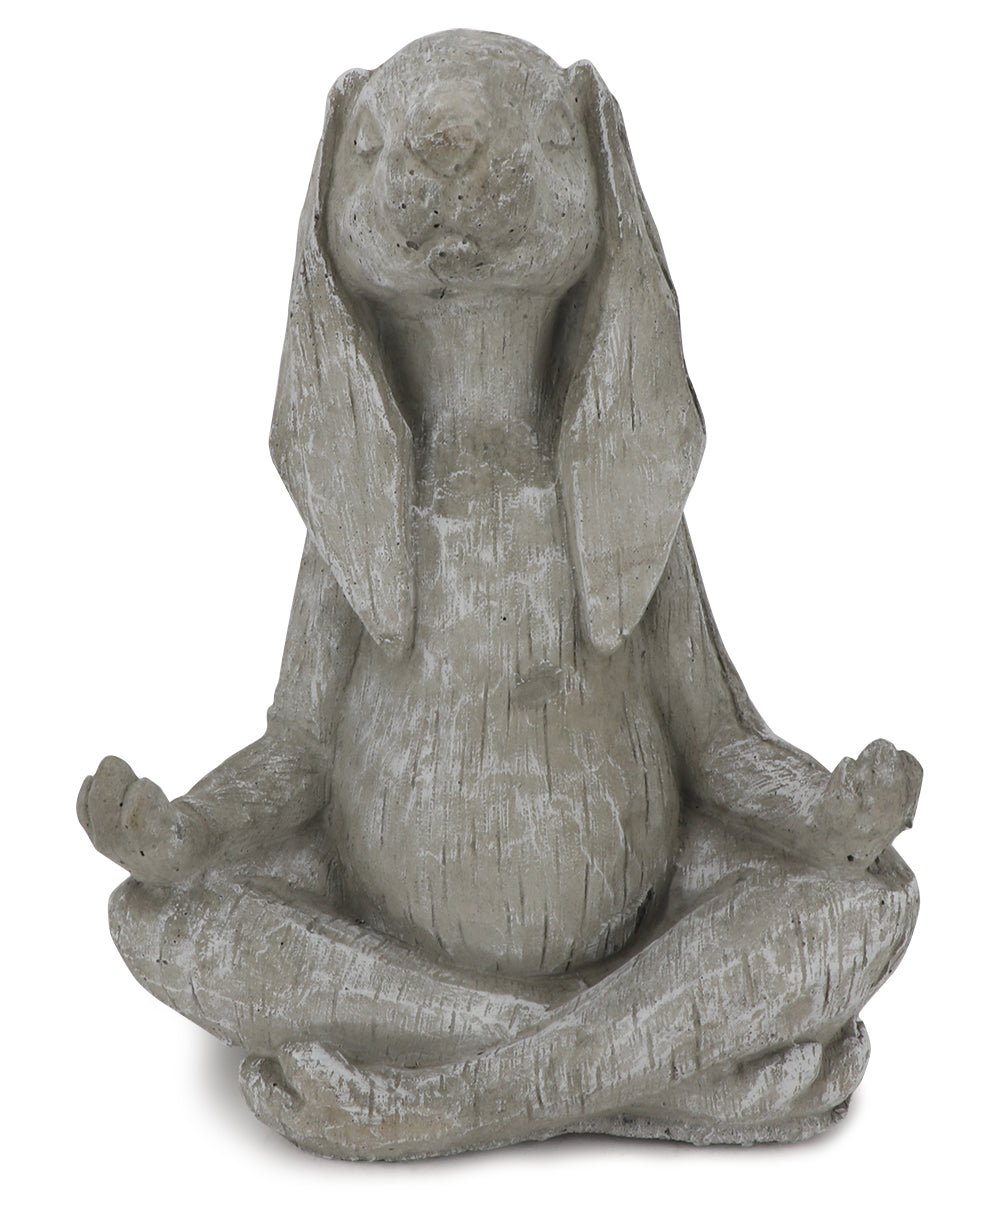 Meditating Yoga Bunny Rabbit Concrete Garden Statue Made in USA - Sculptures & Statues